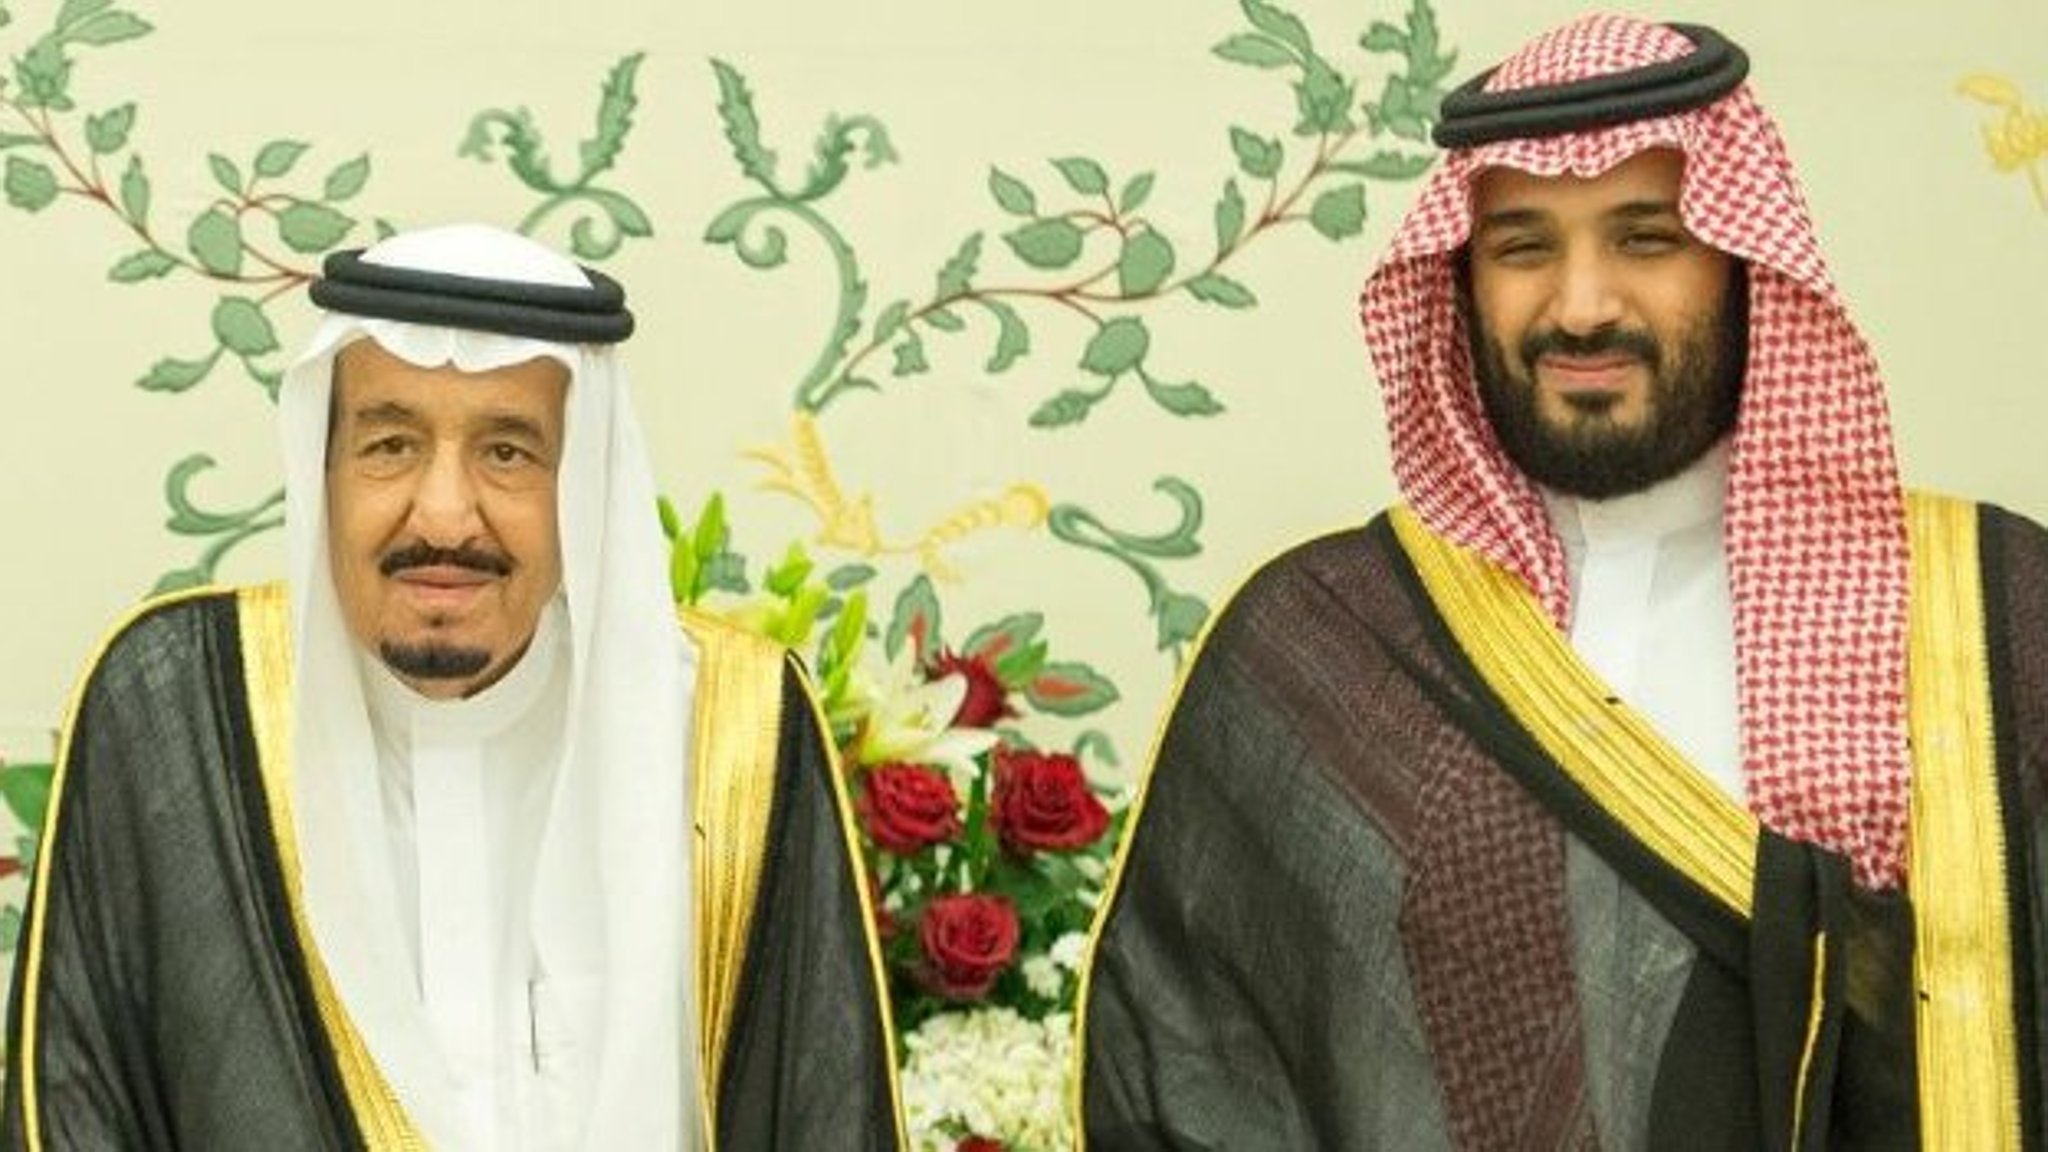 Mohammed bin Salman: the meteoric rise of Saudi Arabia's new crown prince